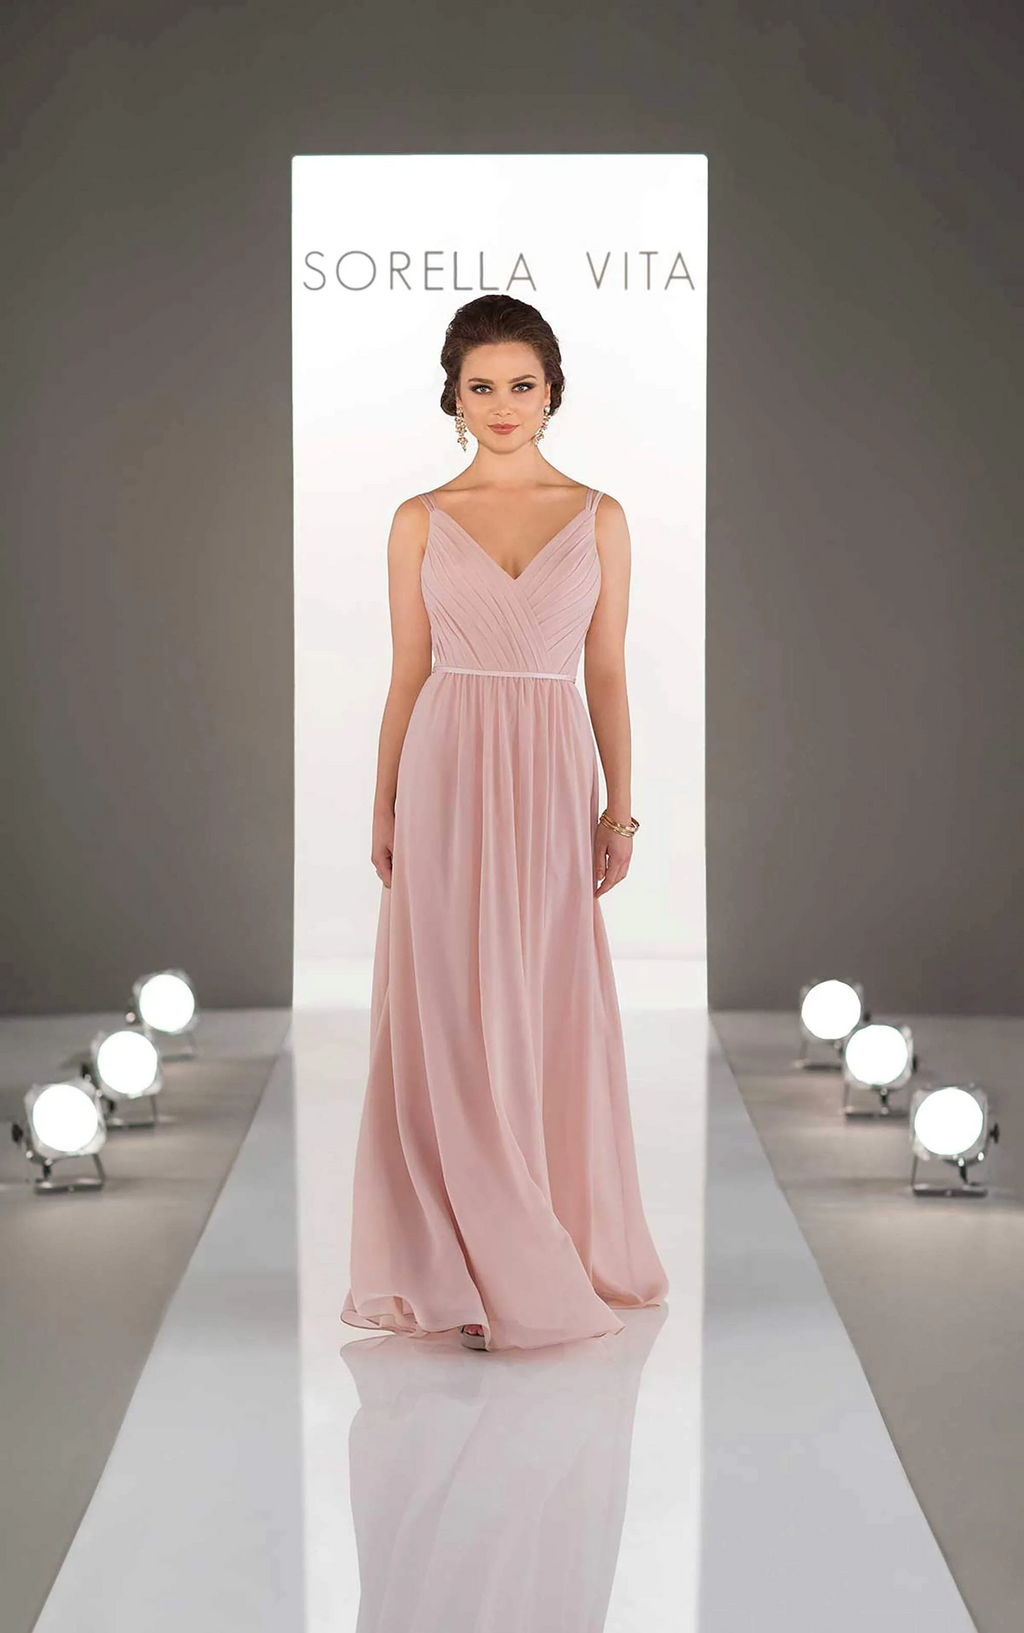 Sorella Vita Dress Style 8614 (Blush-Size 12) Prom, Ball., Black-tie, Bridesmaid, Pageant (Copy) (Copy)